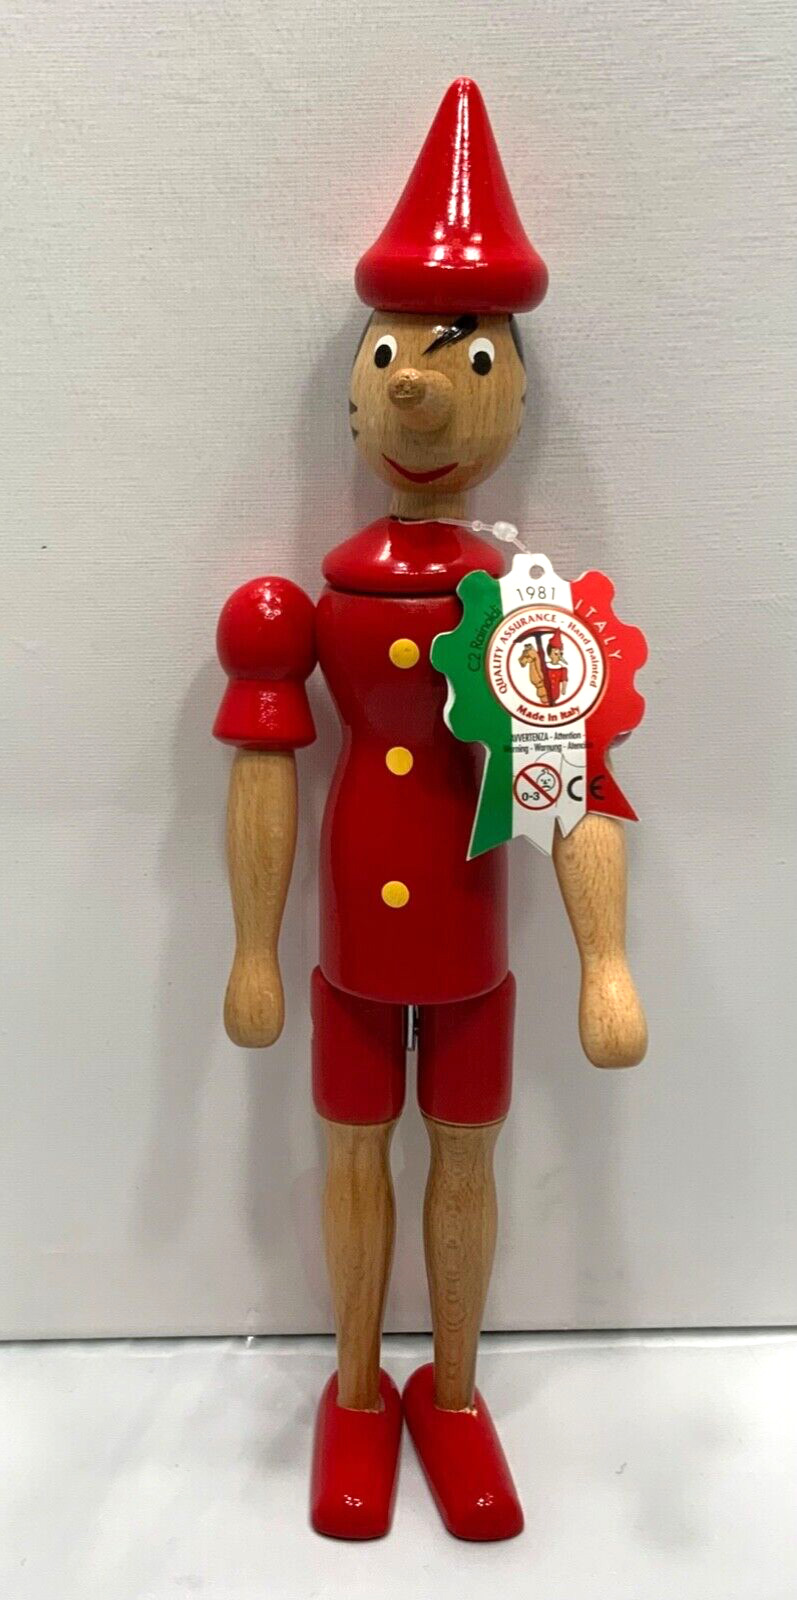 Pinocchio 12” Tall Hand painted C2 Rainoldi 1981 Wooden Figure Made In Italy